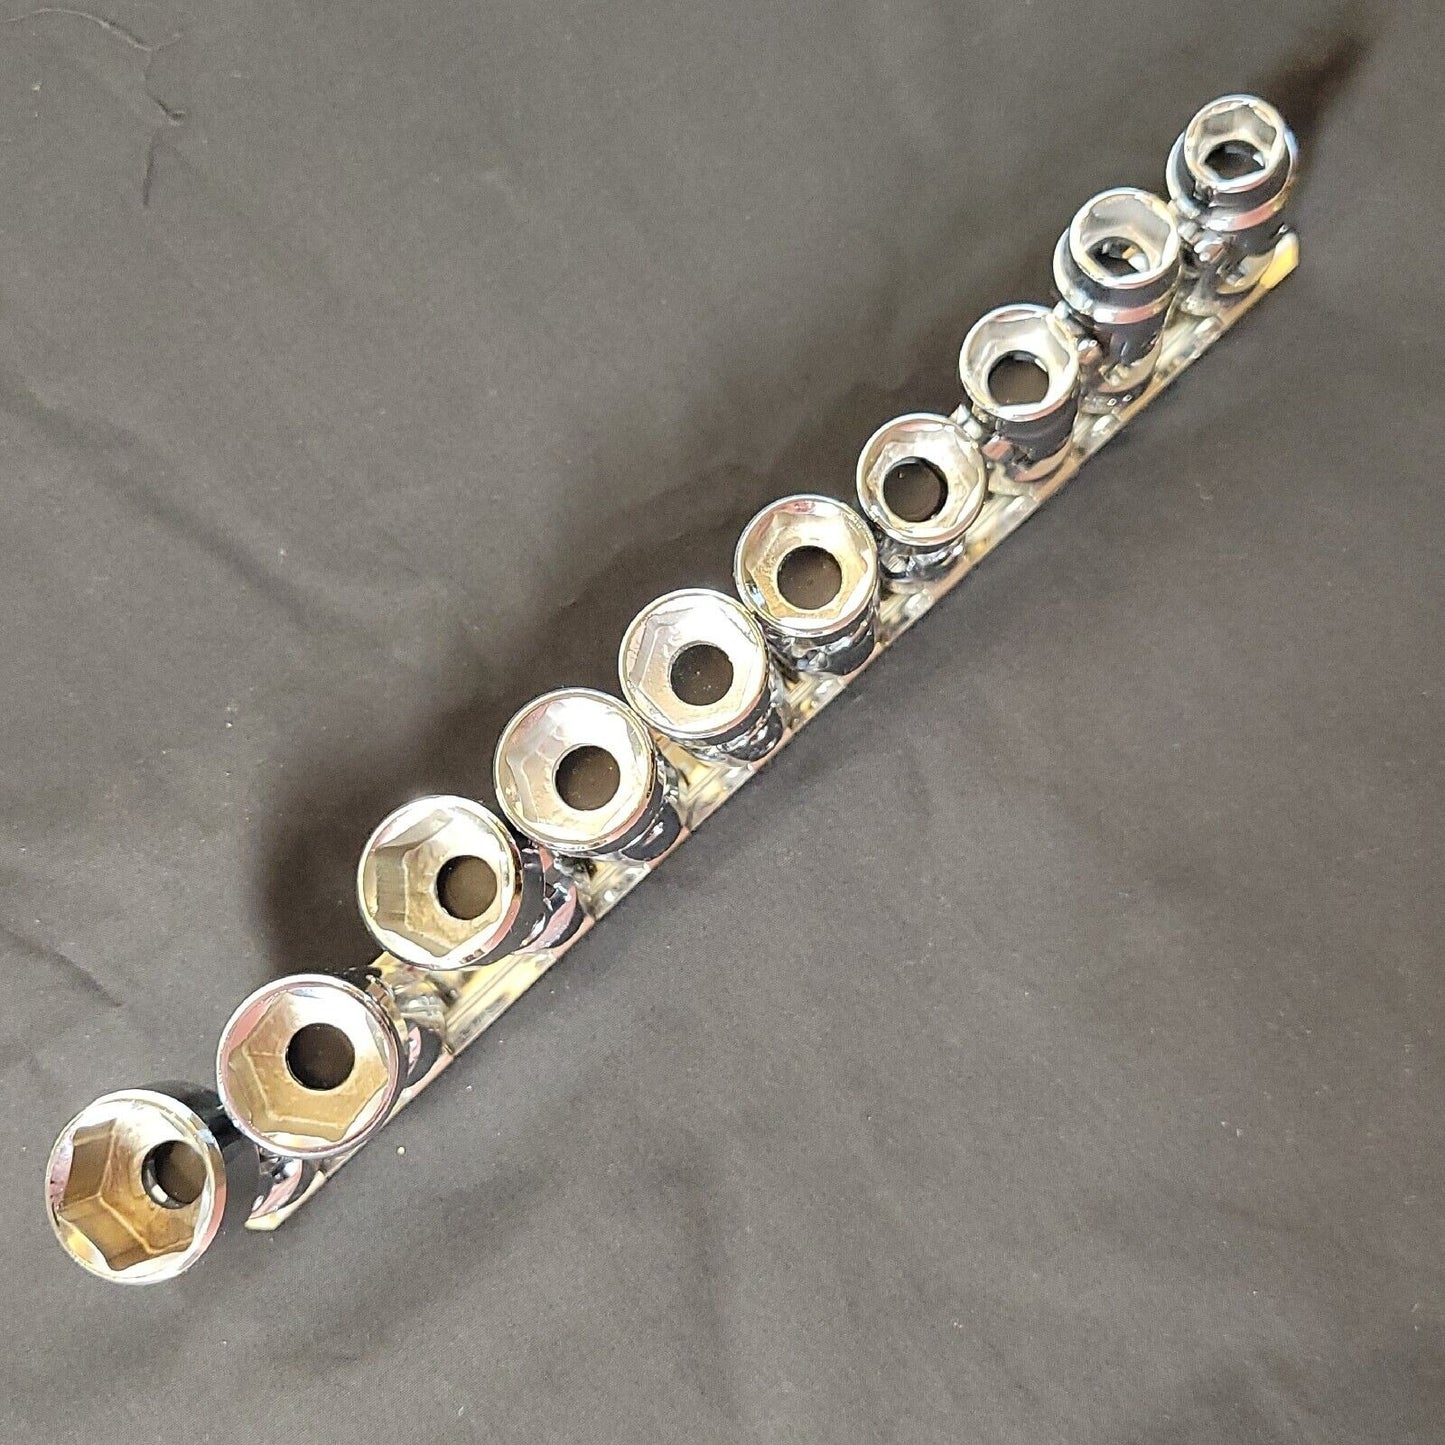 PROTO Flex Socket Set 3/8 in 10 Piece 10 mm to 19 mm 6 point rail